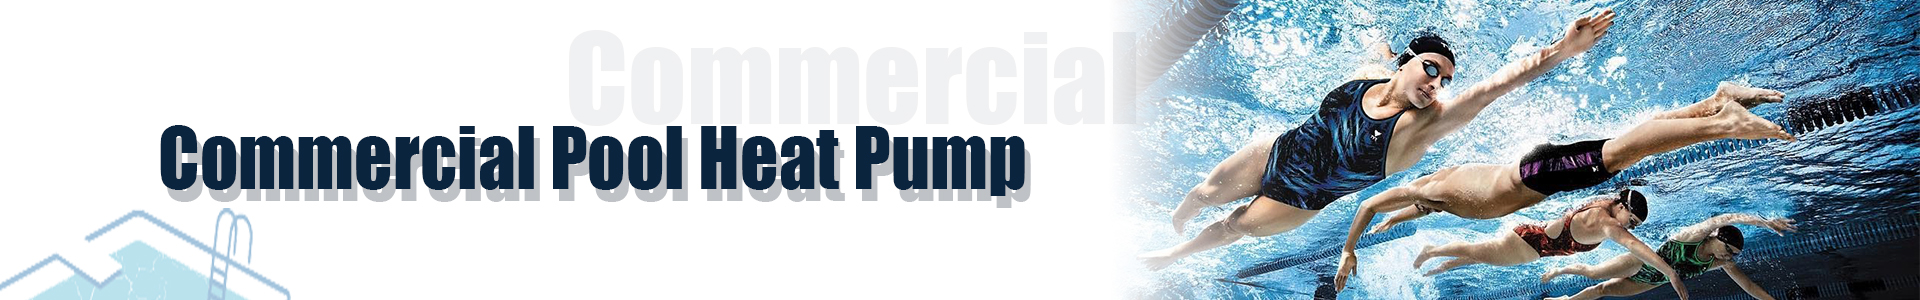 Commercial Pool Heat Pump